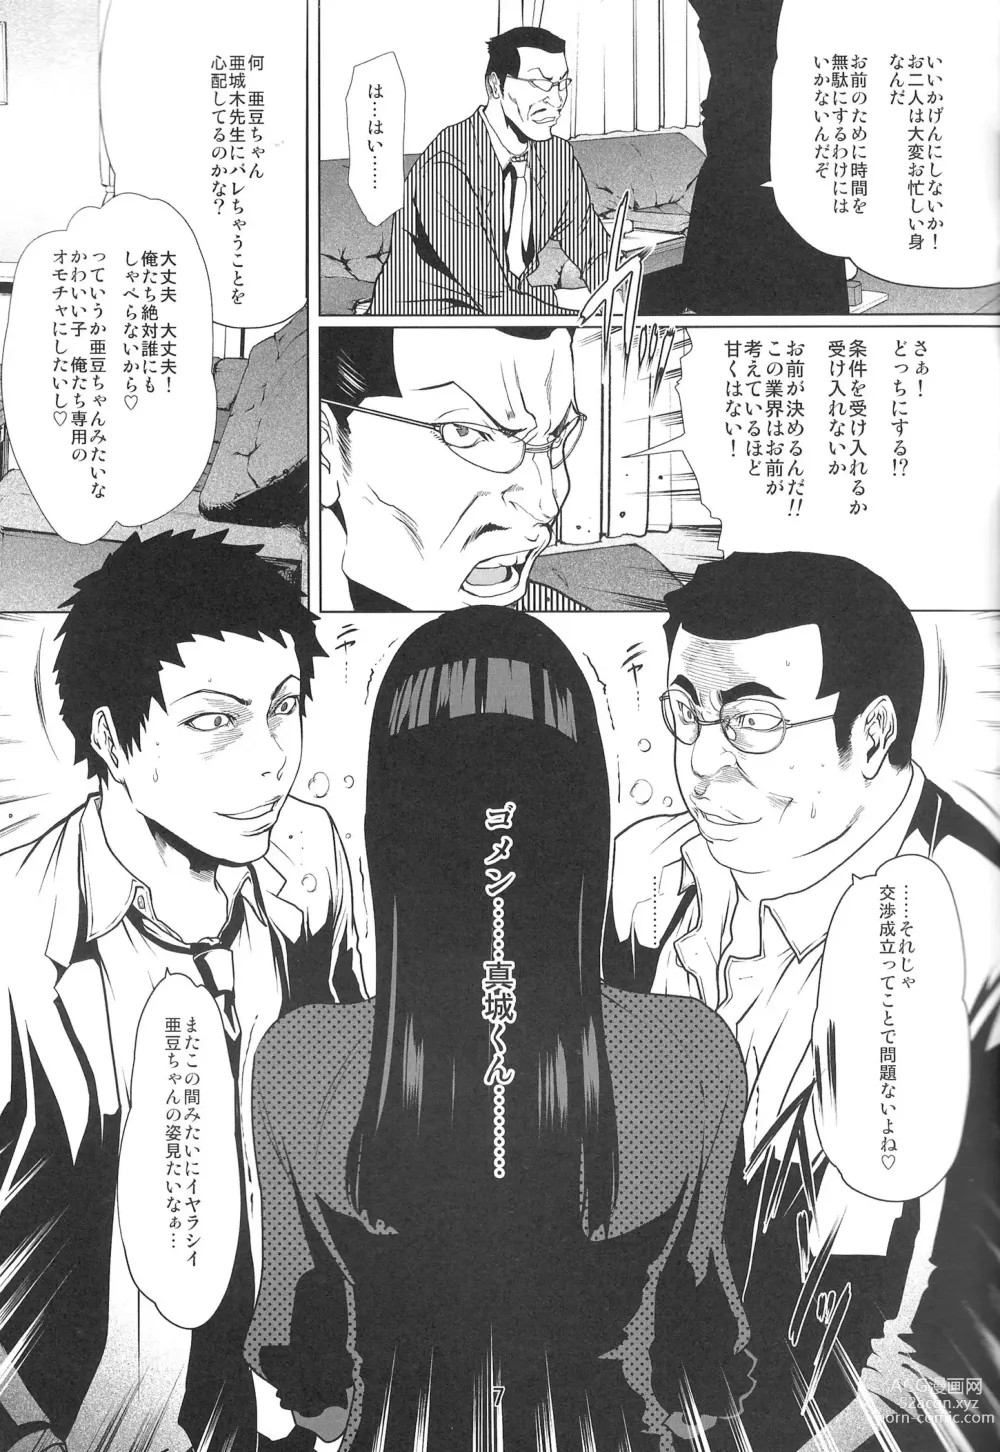 Page 6 of doujinshi BAKULOVE. 01